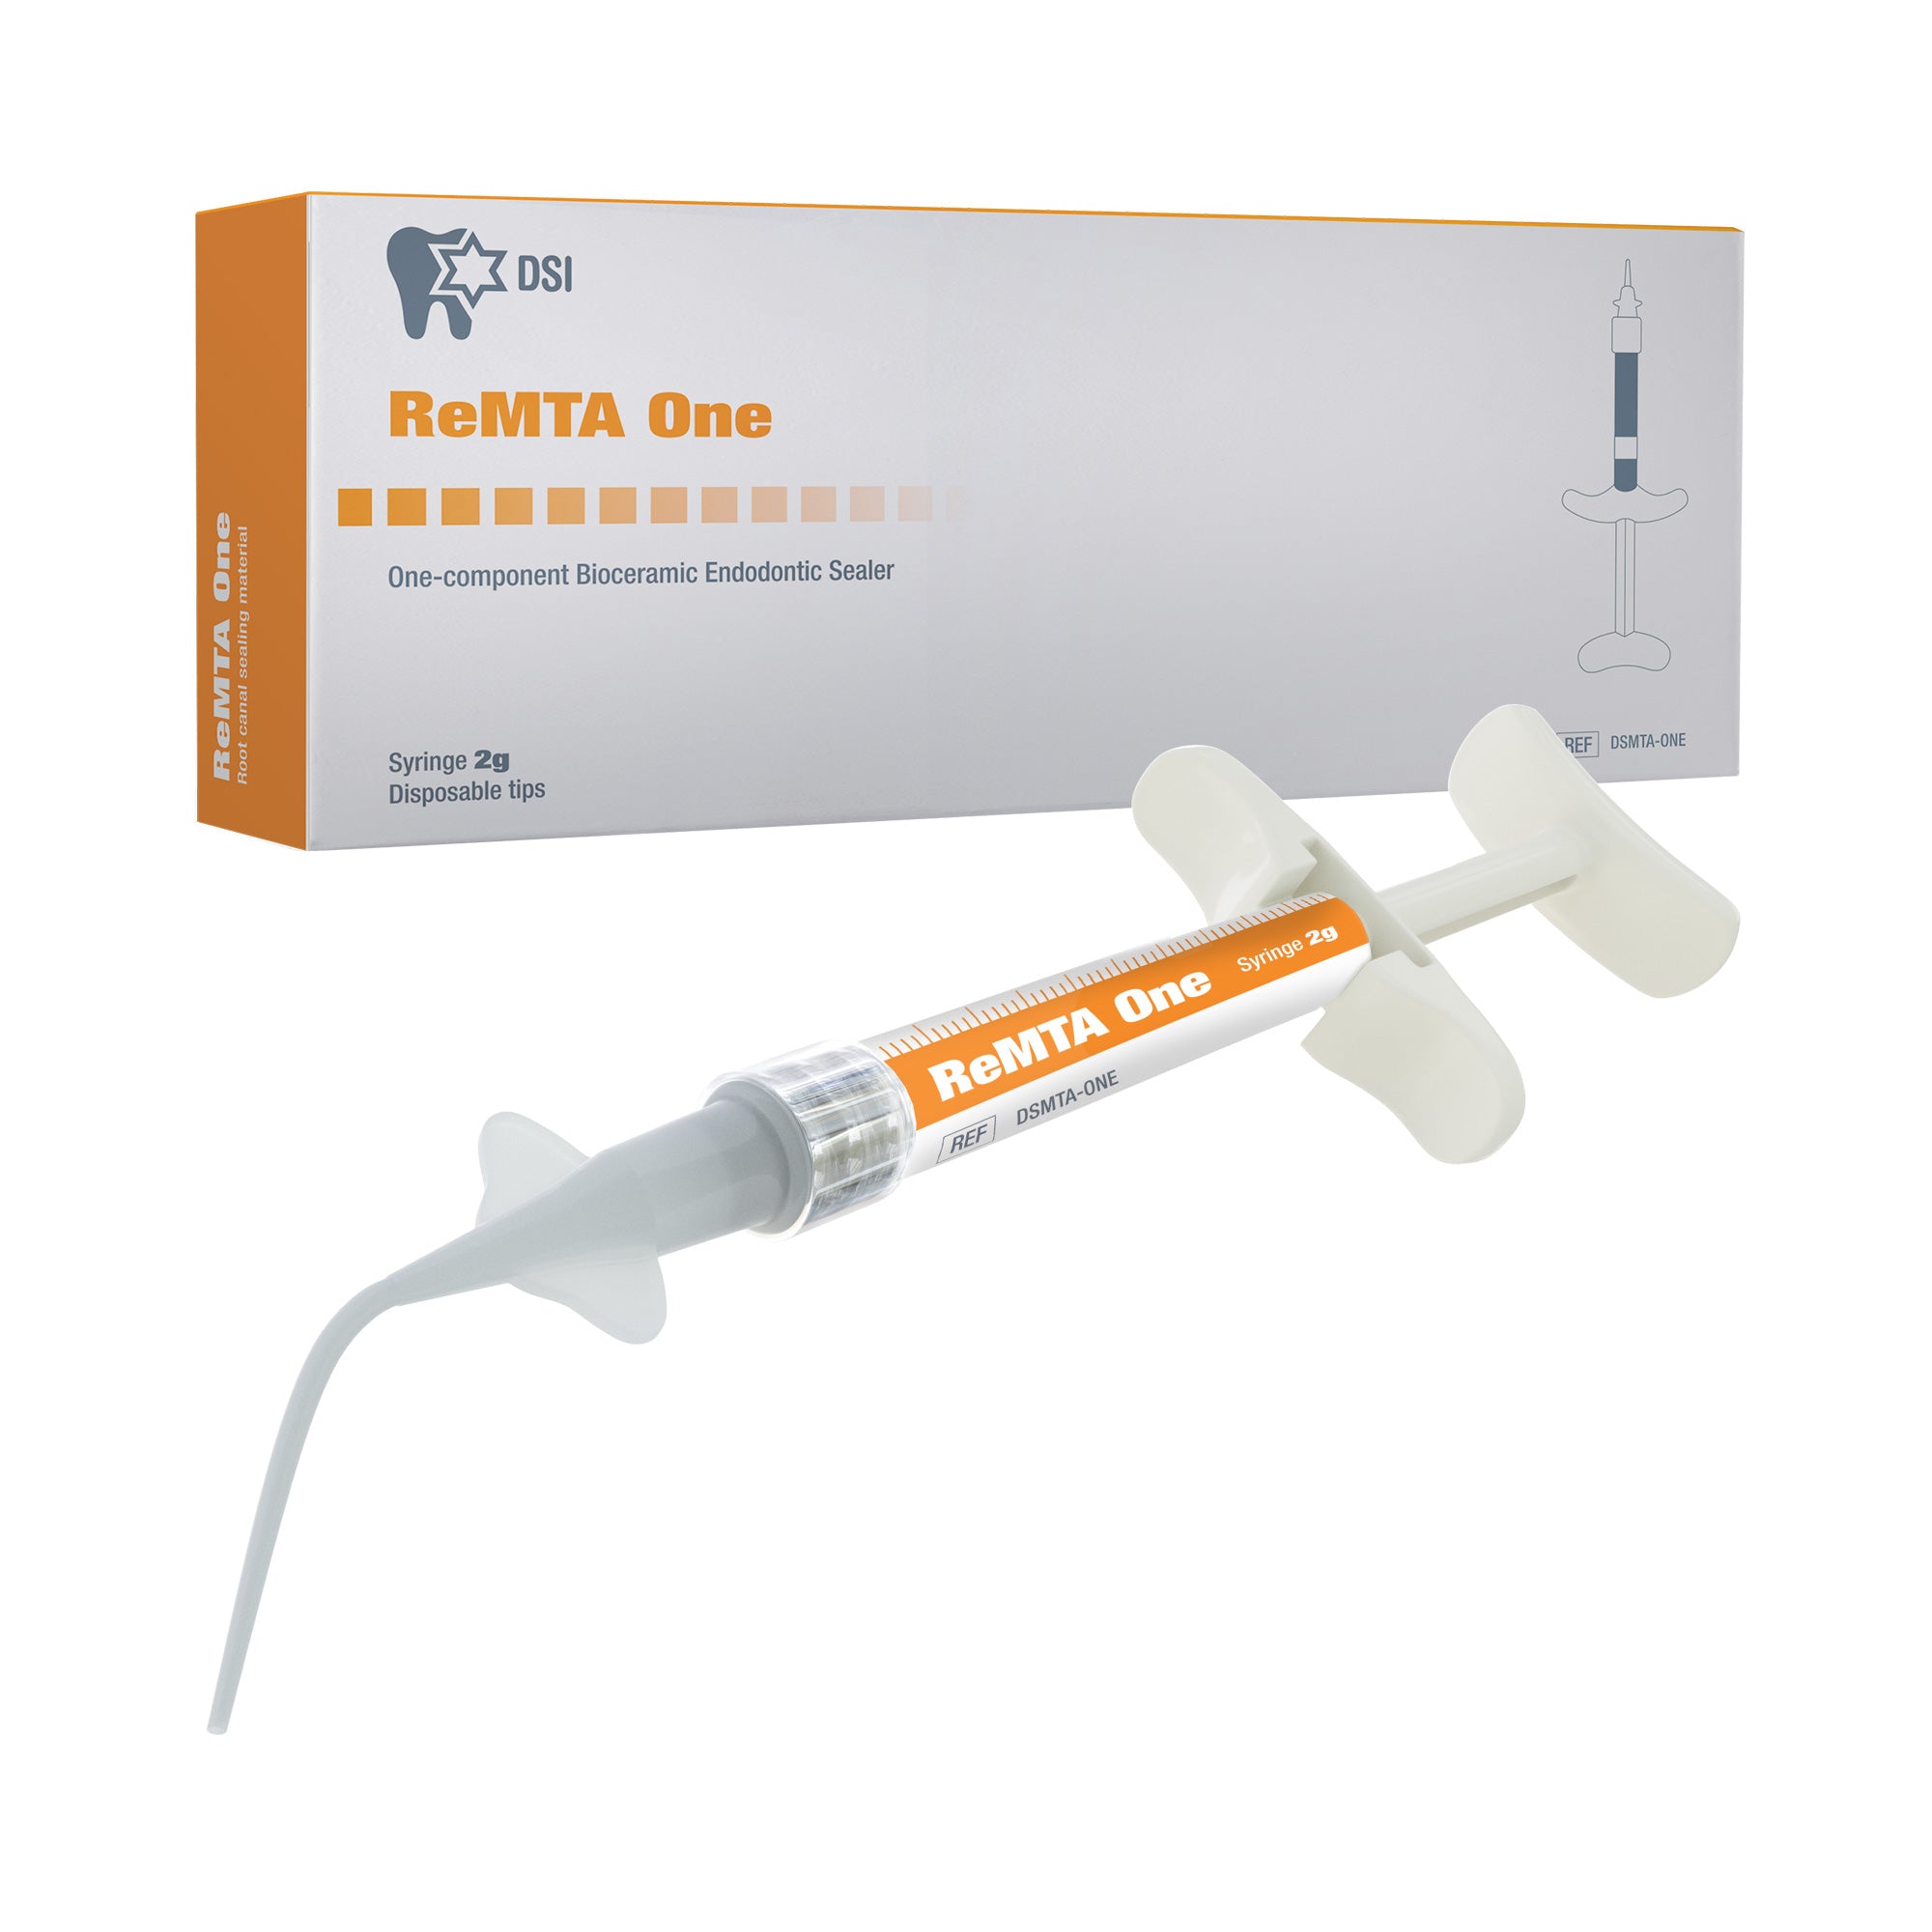 DSI ReMTA One Bioceramic Endodontic Root Canal Sealer In Syringe 2g